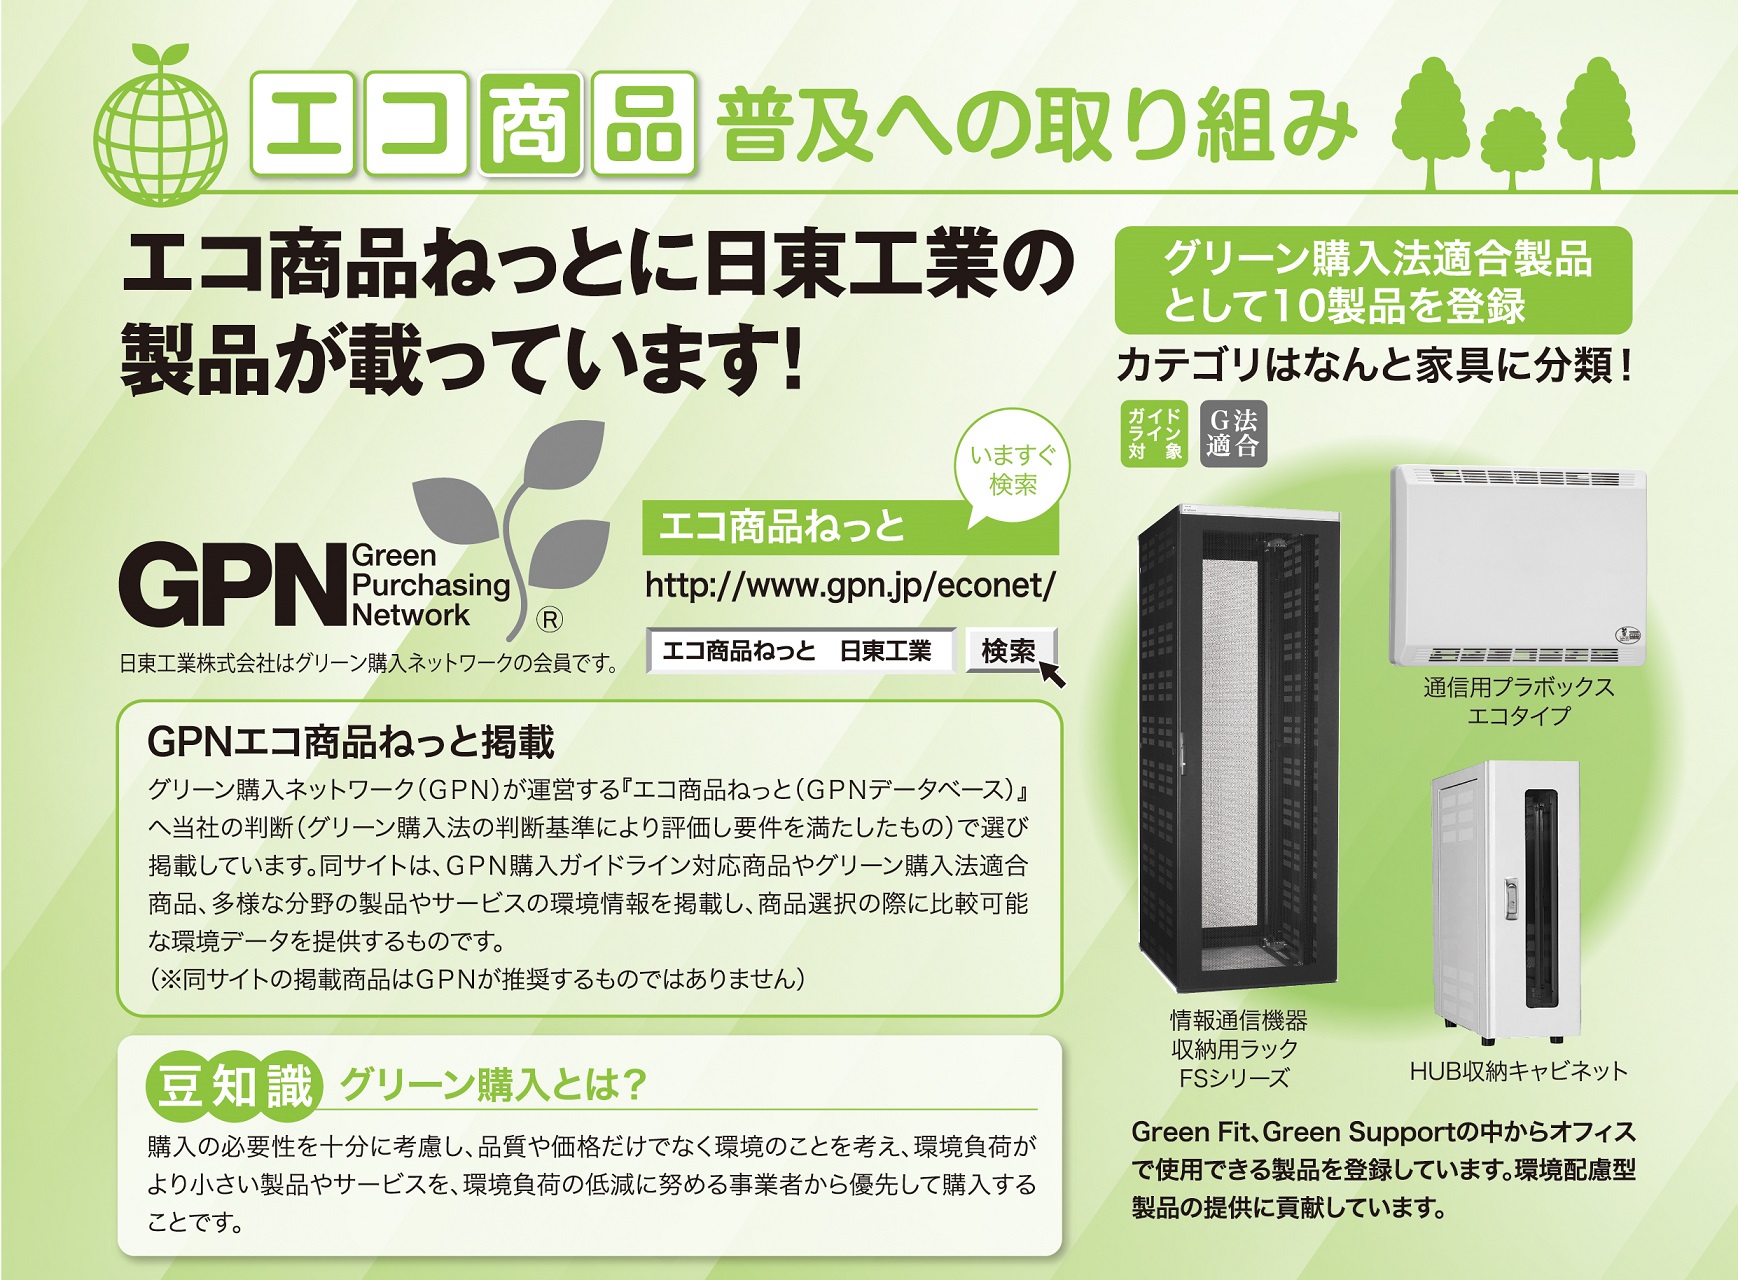 GPNシンボルマーク事例】日東工業：社内報「エコ商品普及への取り組みの記事」 | グリーン購入ネットワーク